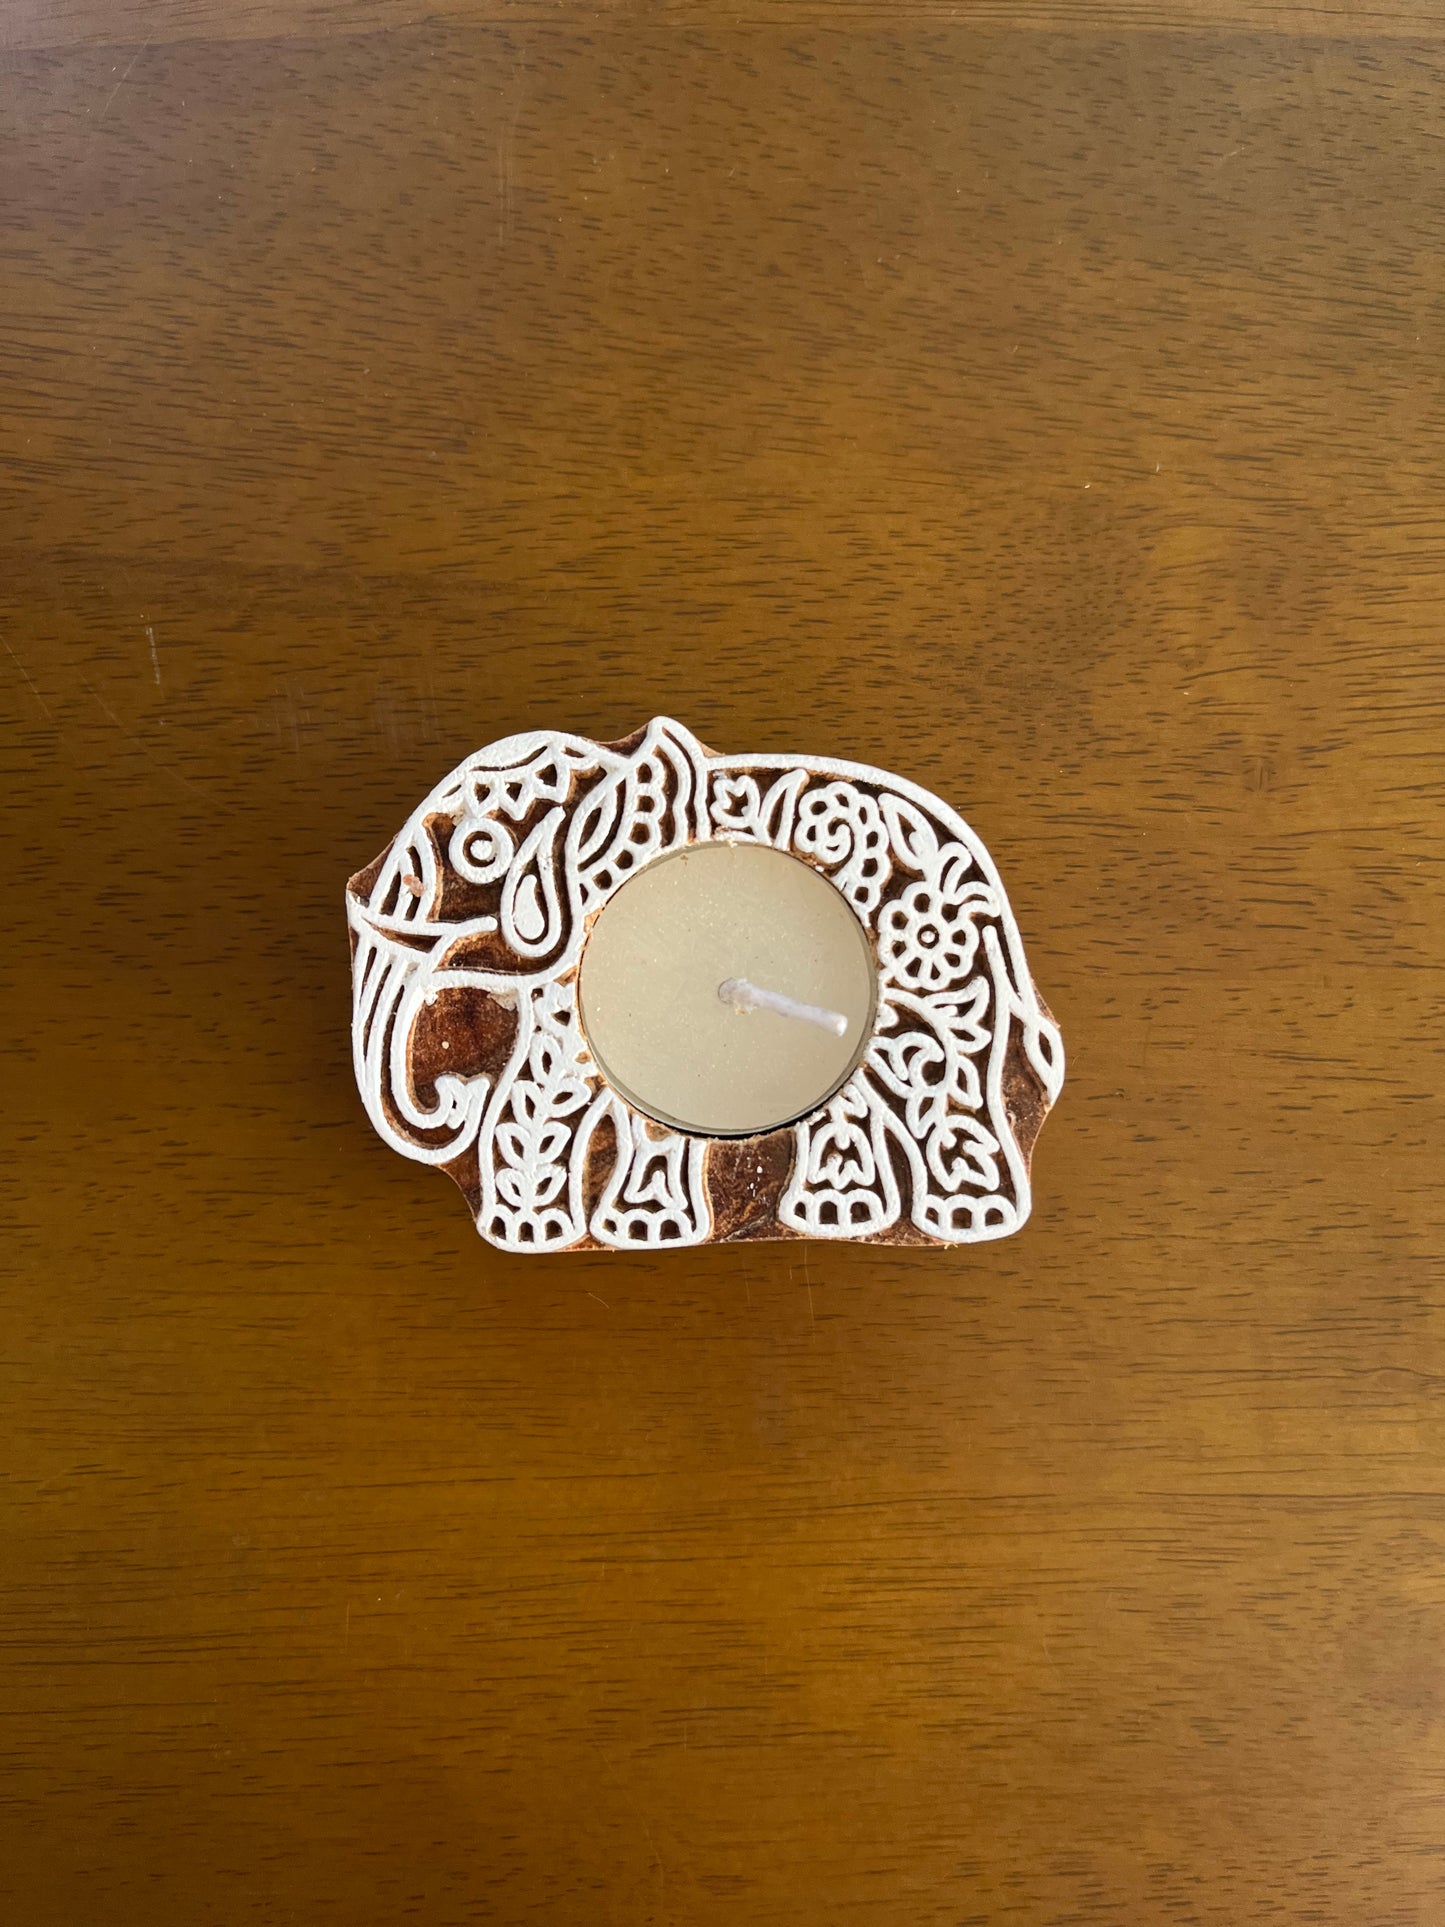 Elephant Printing Block Candle Holder Set Of 4 Pc